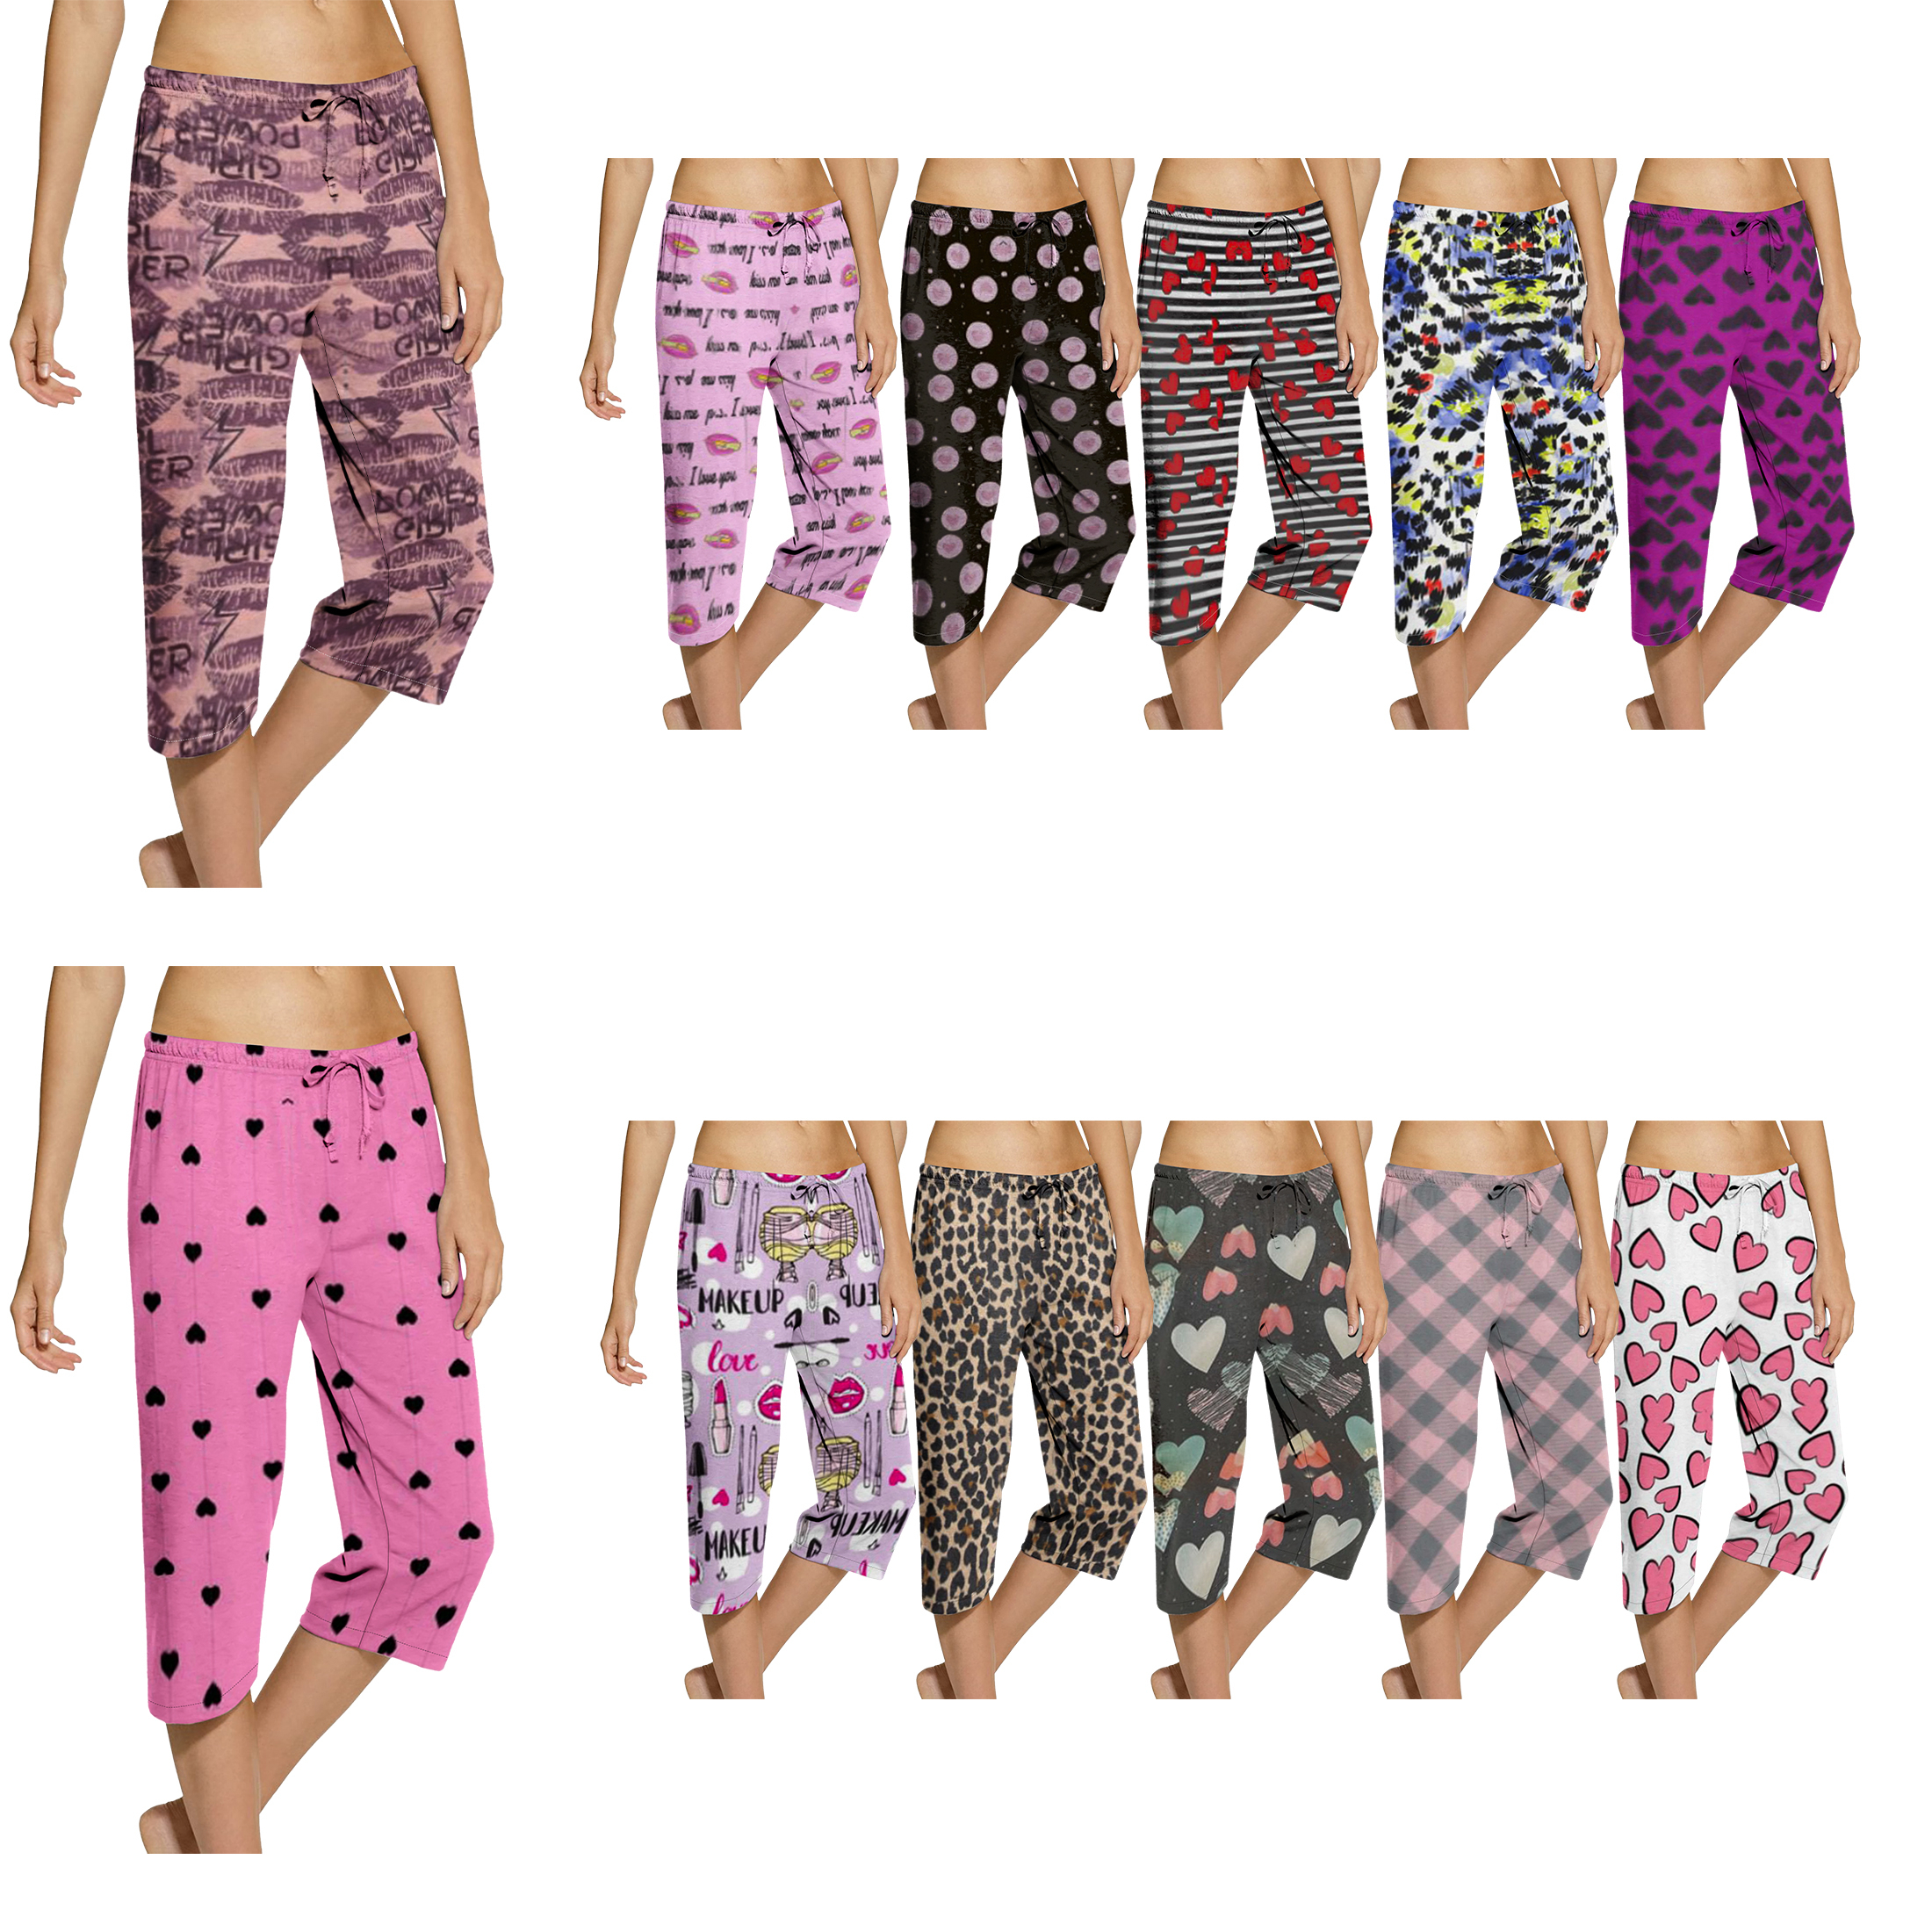 5-Pack Women's Capri Pajama Pants Soft Comfy Printed Summer Sleepwear Ladies PJ Bottom With Drawstring - S